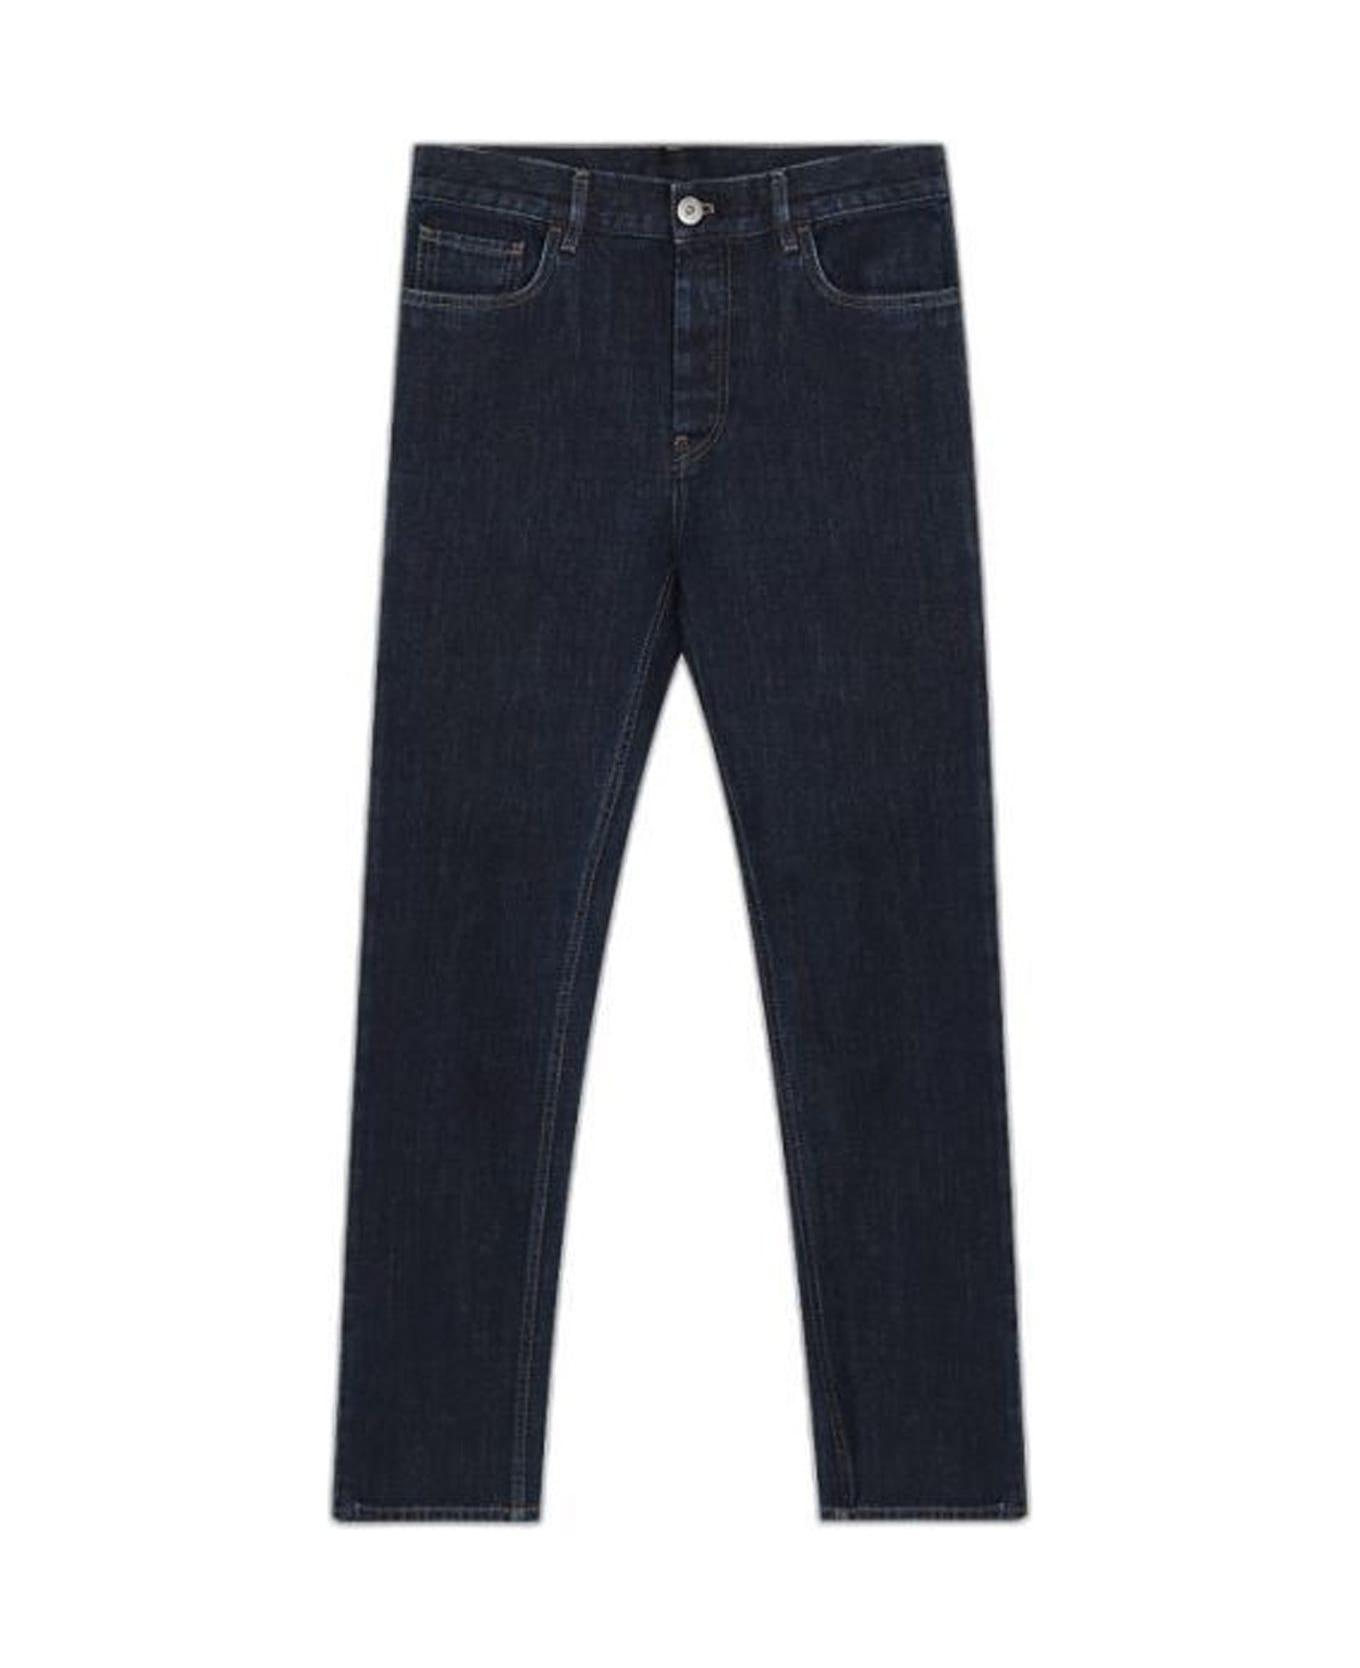 Prada Cotton Denim Jeans - Blue